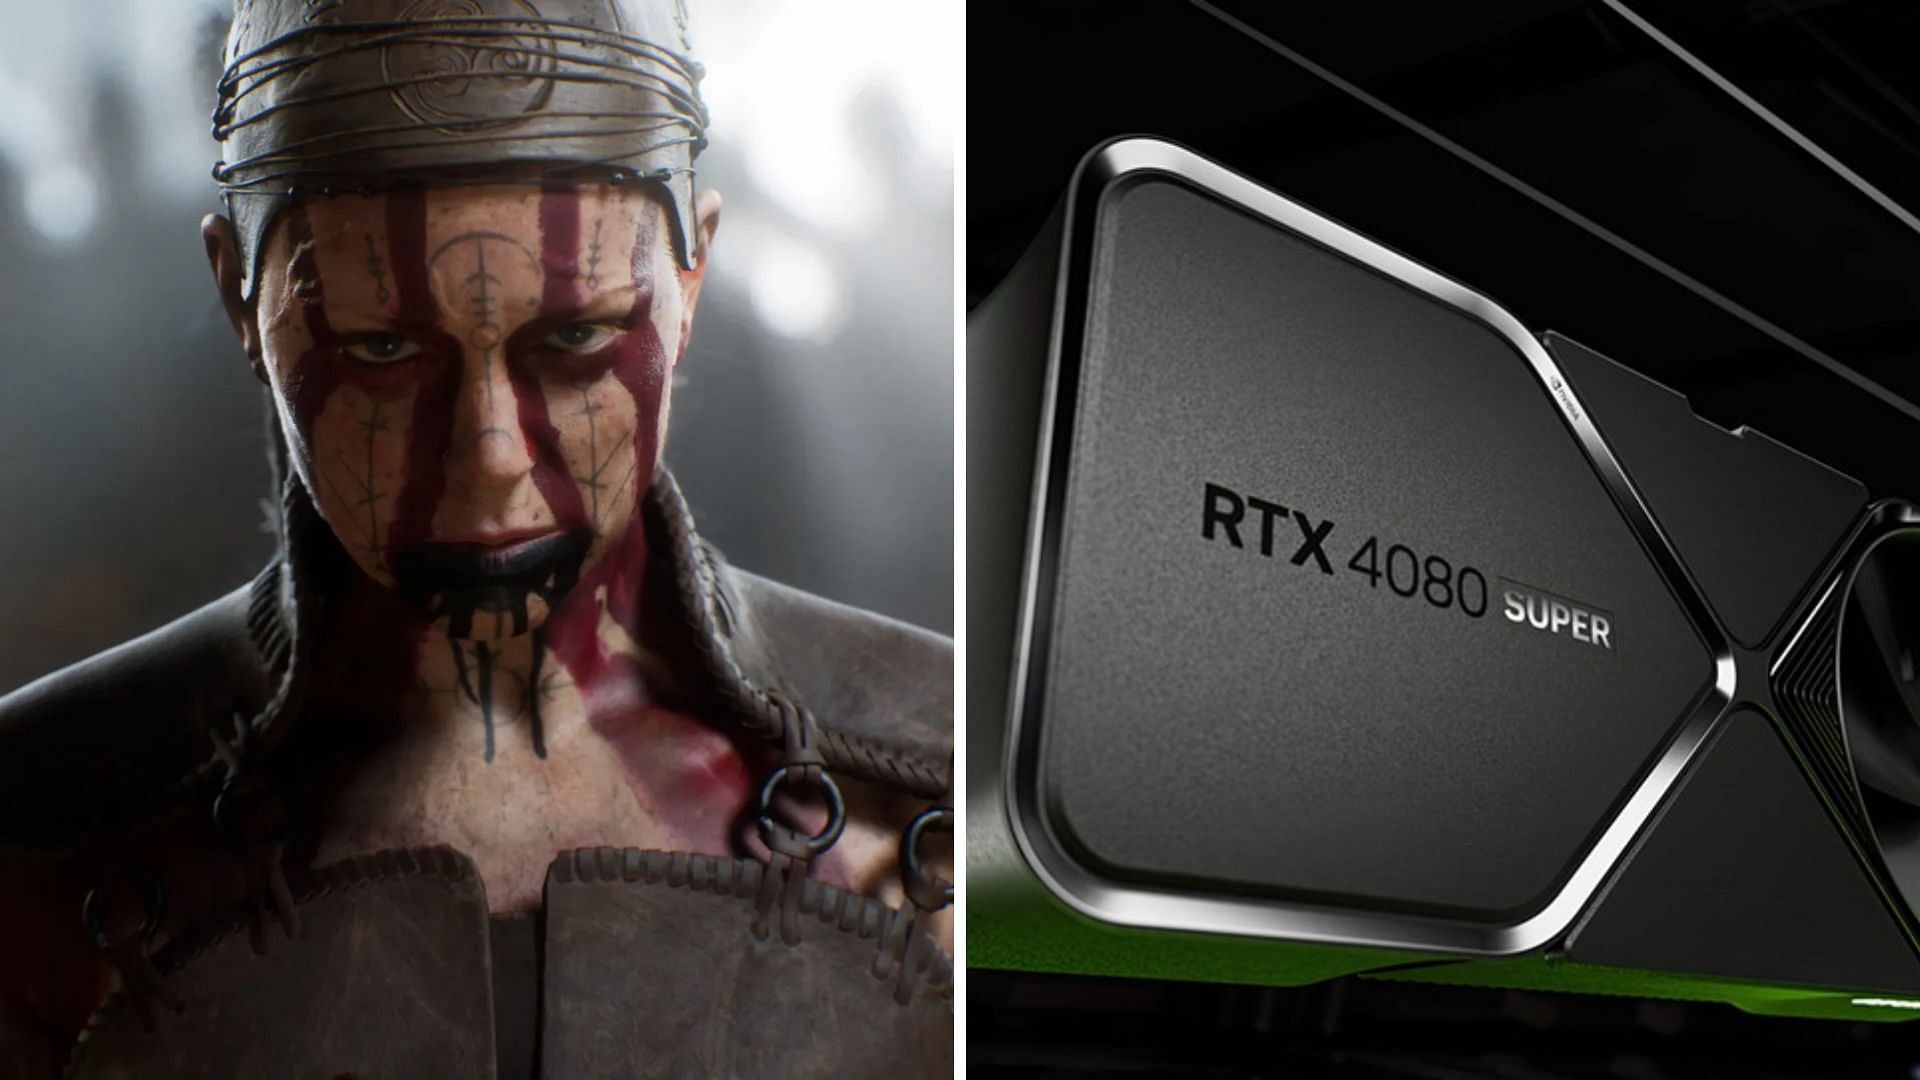 The Nvidia RTX 4080 and 4080 Super are powerful GPUs for Senua